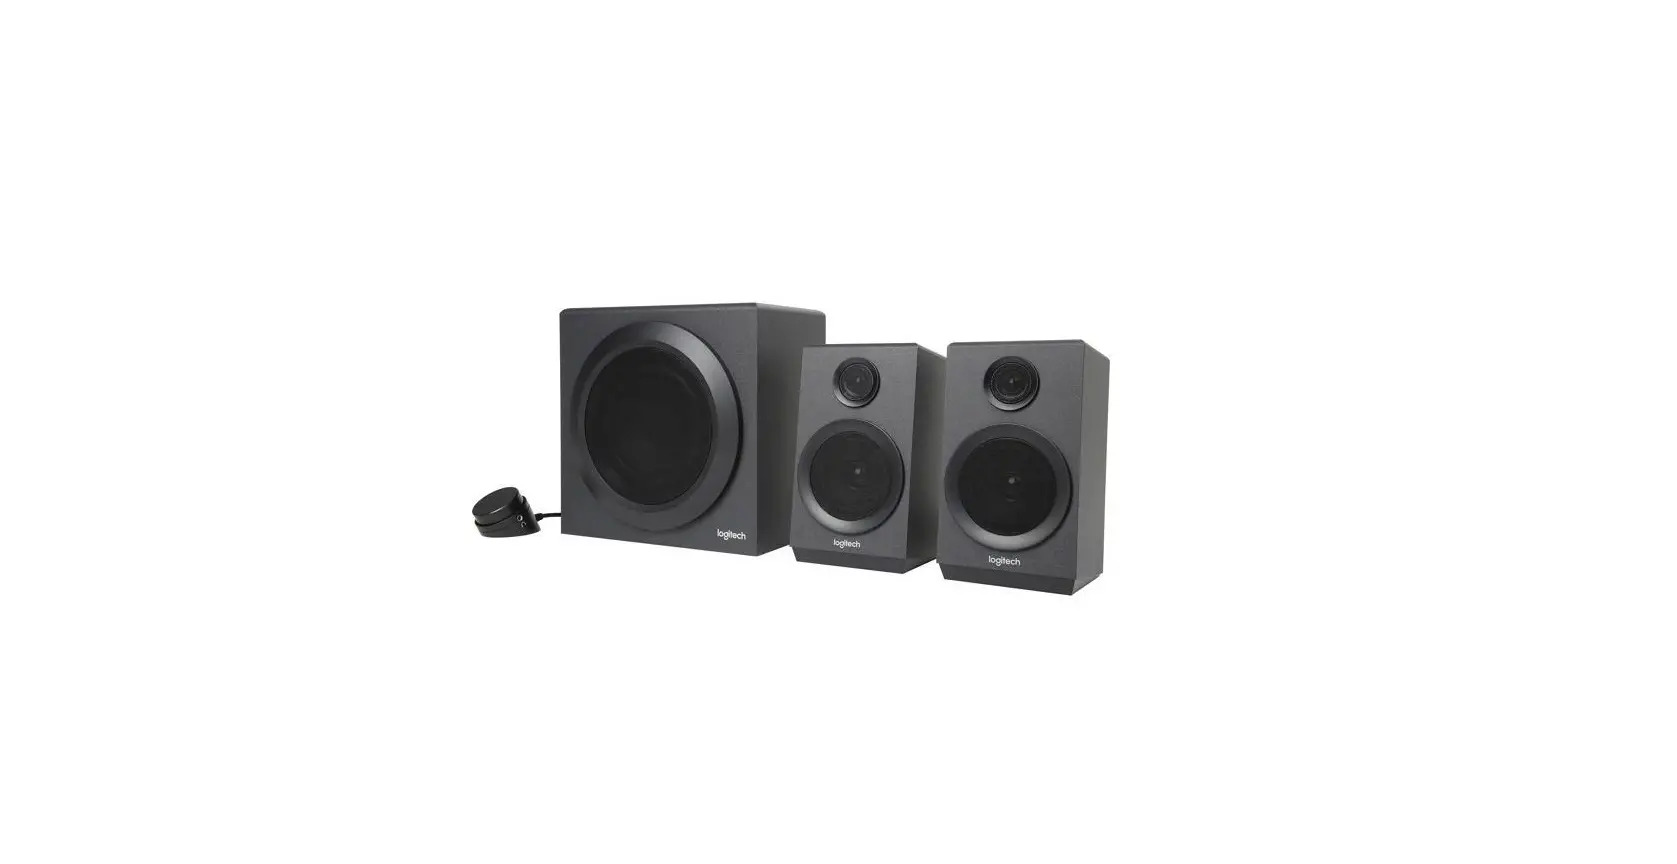 Z333 2.1 Speakers – Easy-access Volume Control